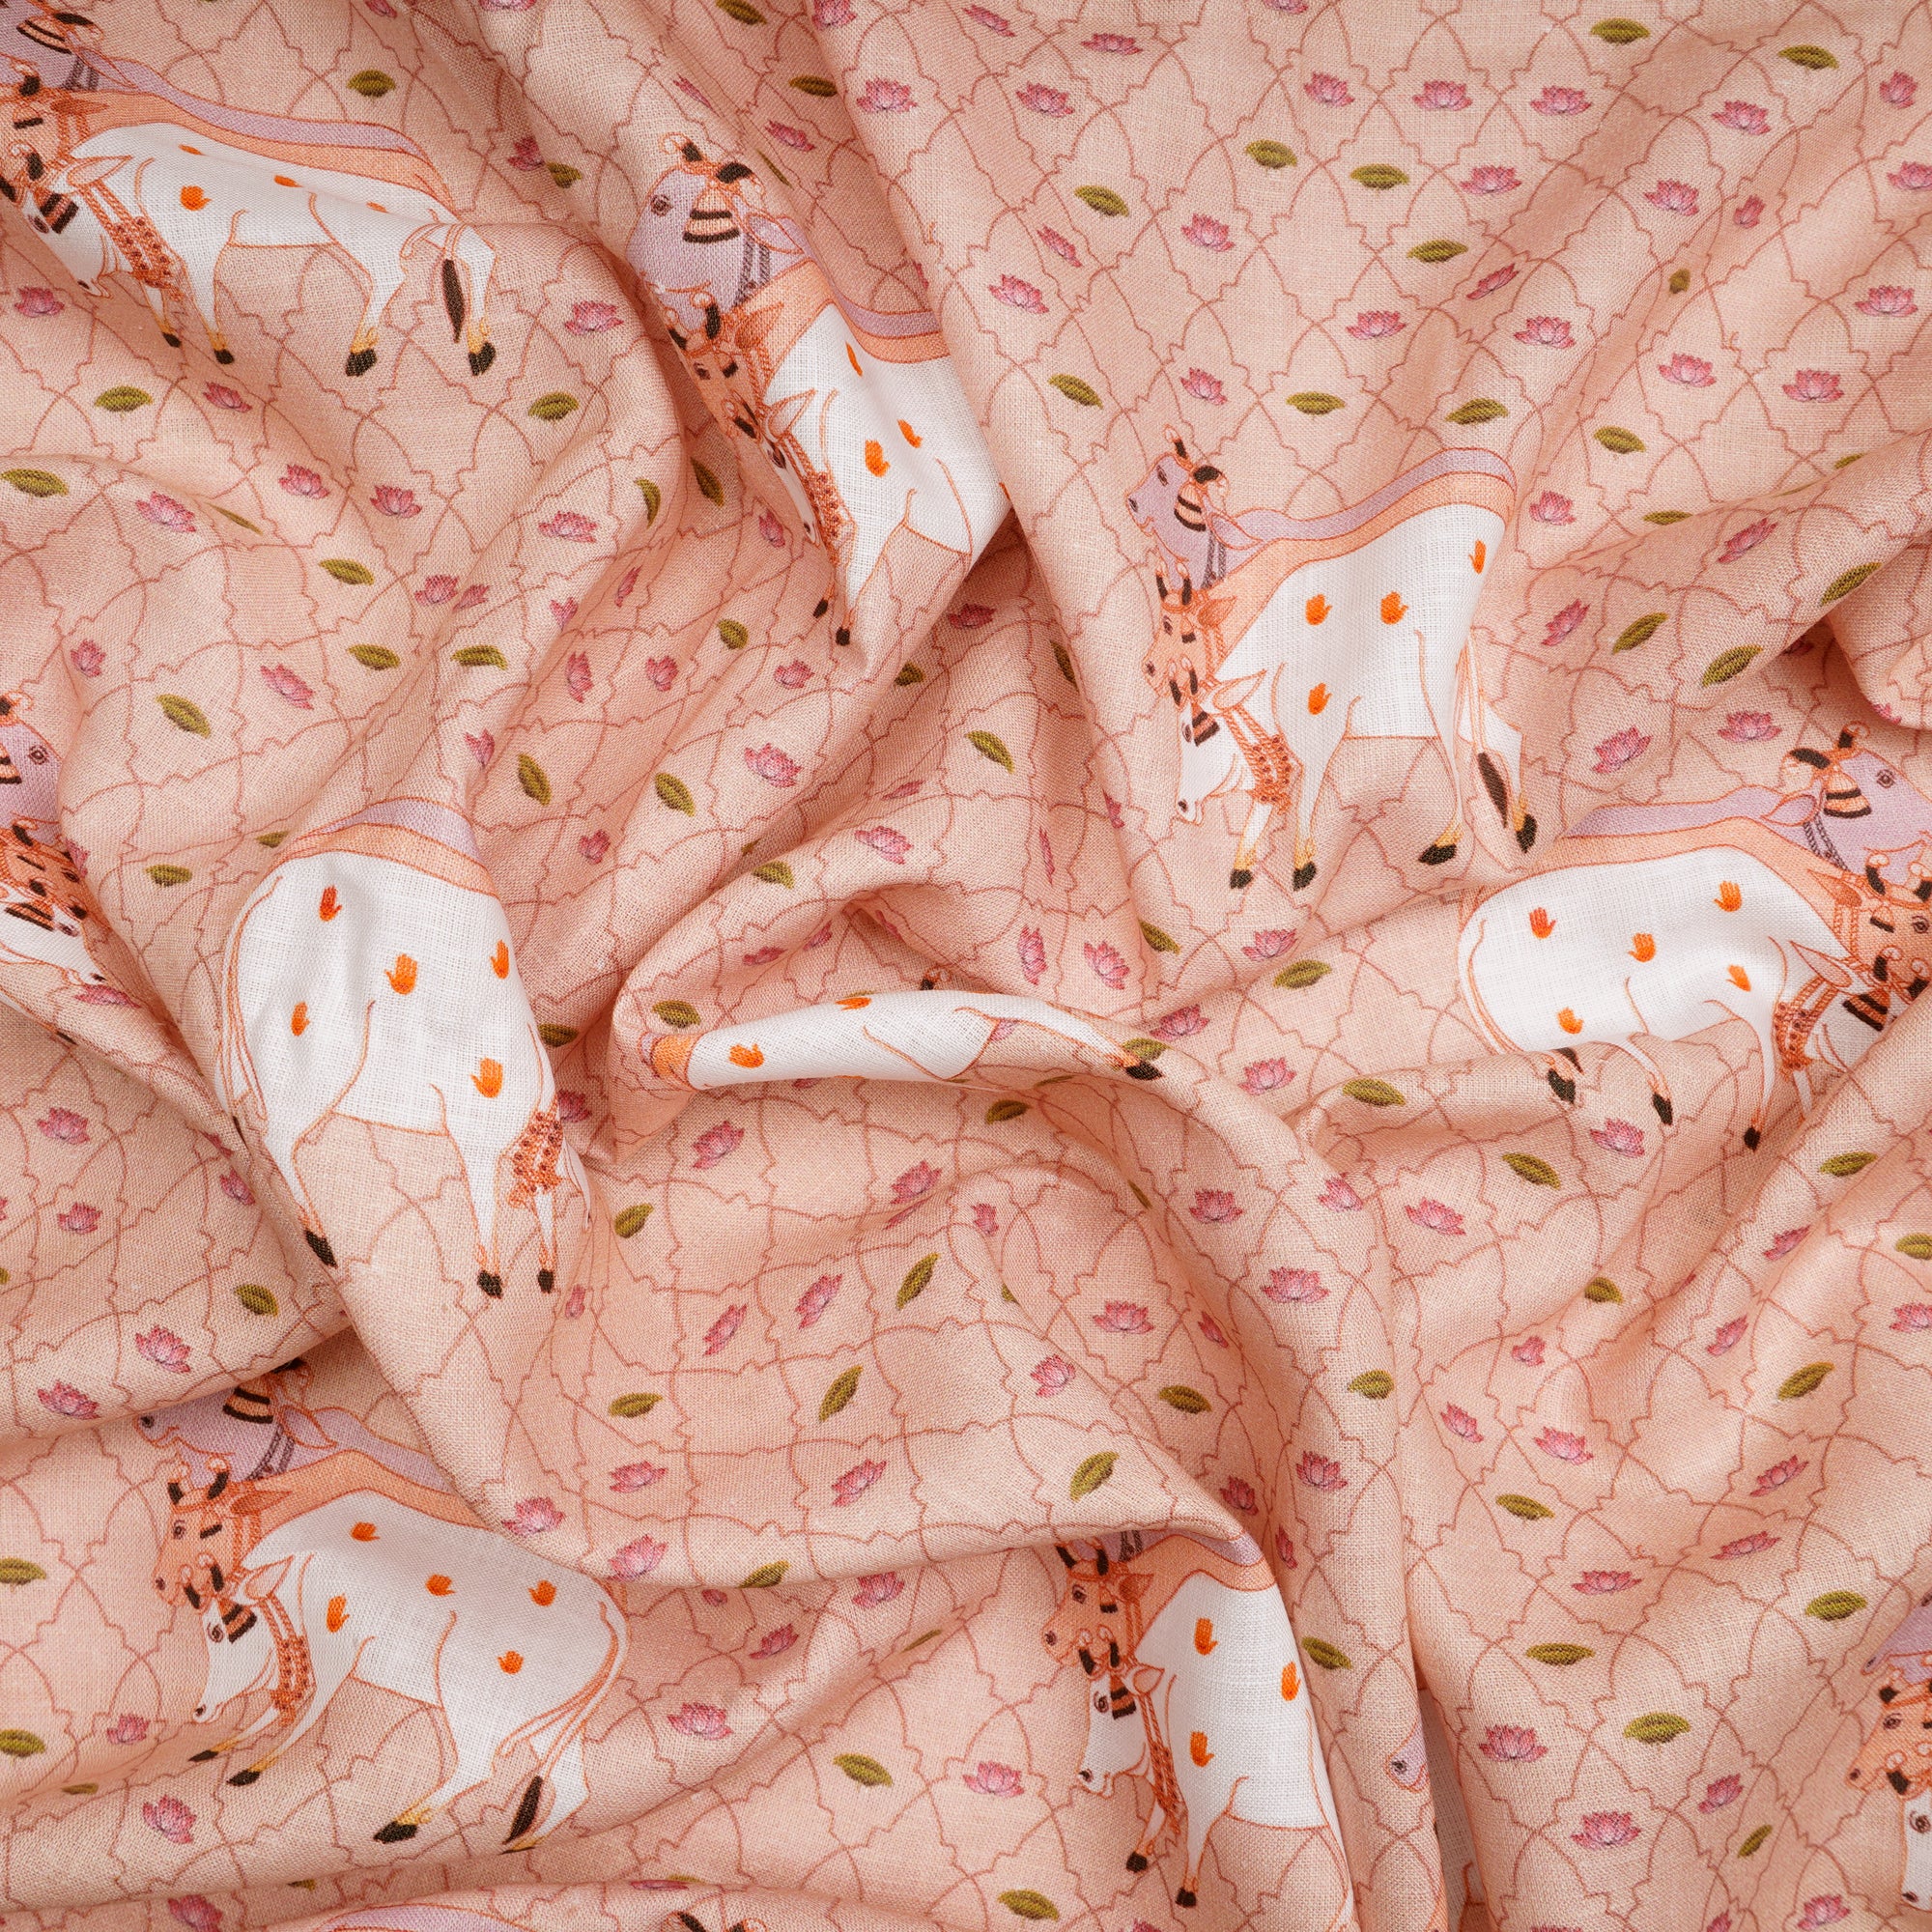 Peachy Keen Pichwai Pattern Digital Print Linen Fabric